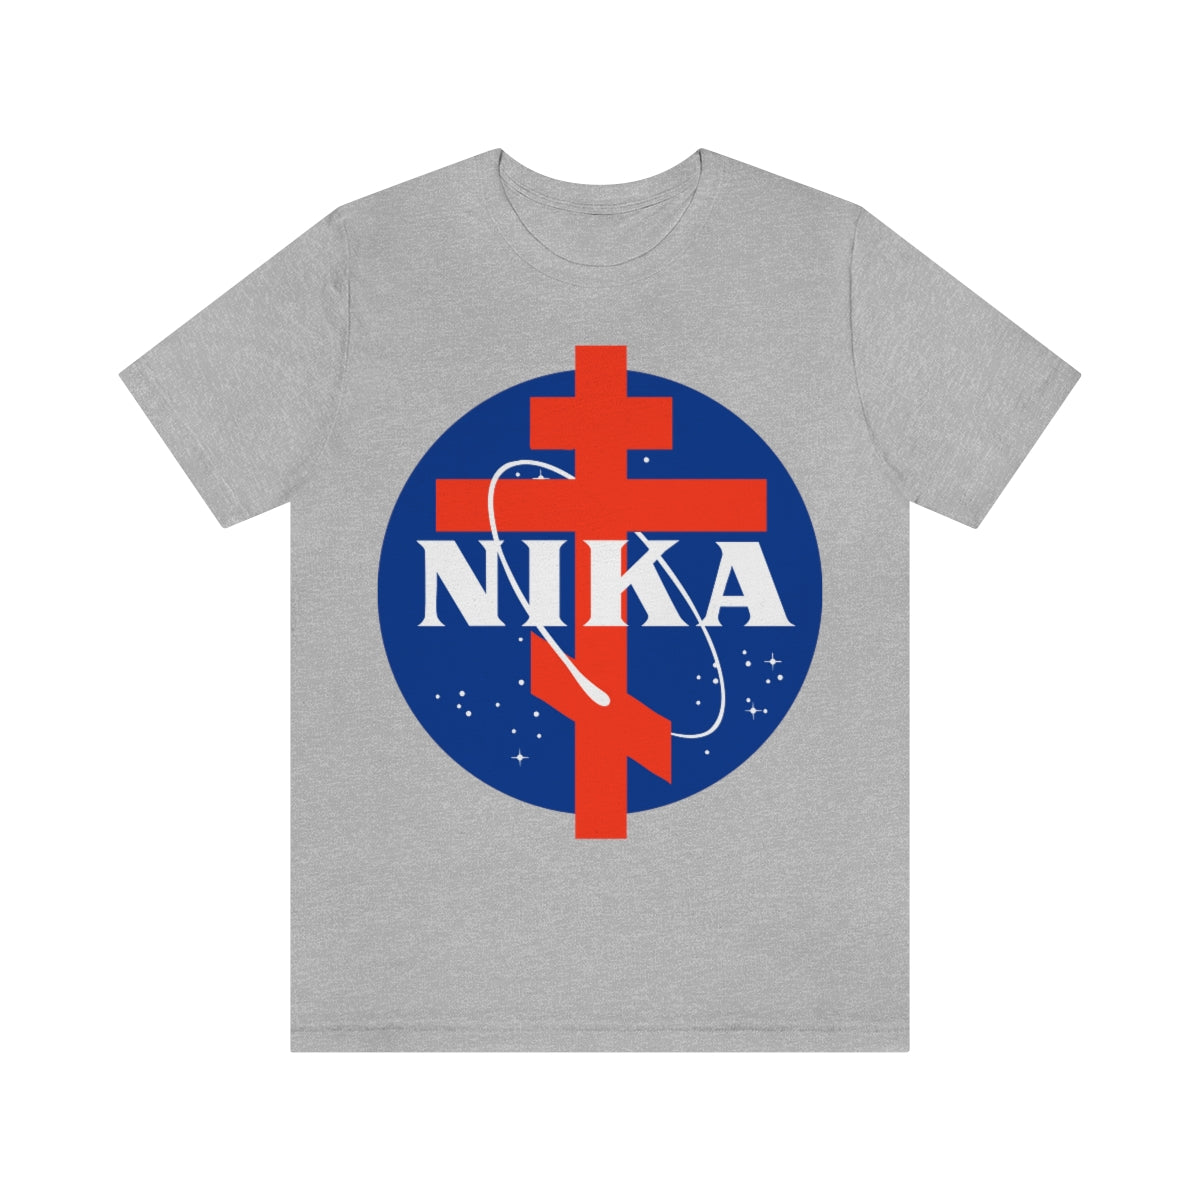 NASA / NIKA Logo Mashup Design | Orthodox Christian T-Shirt